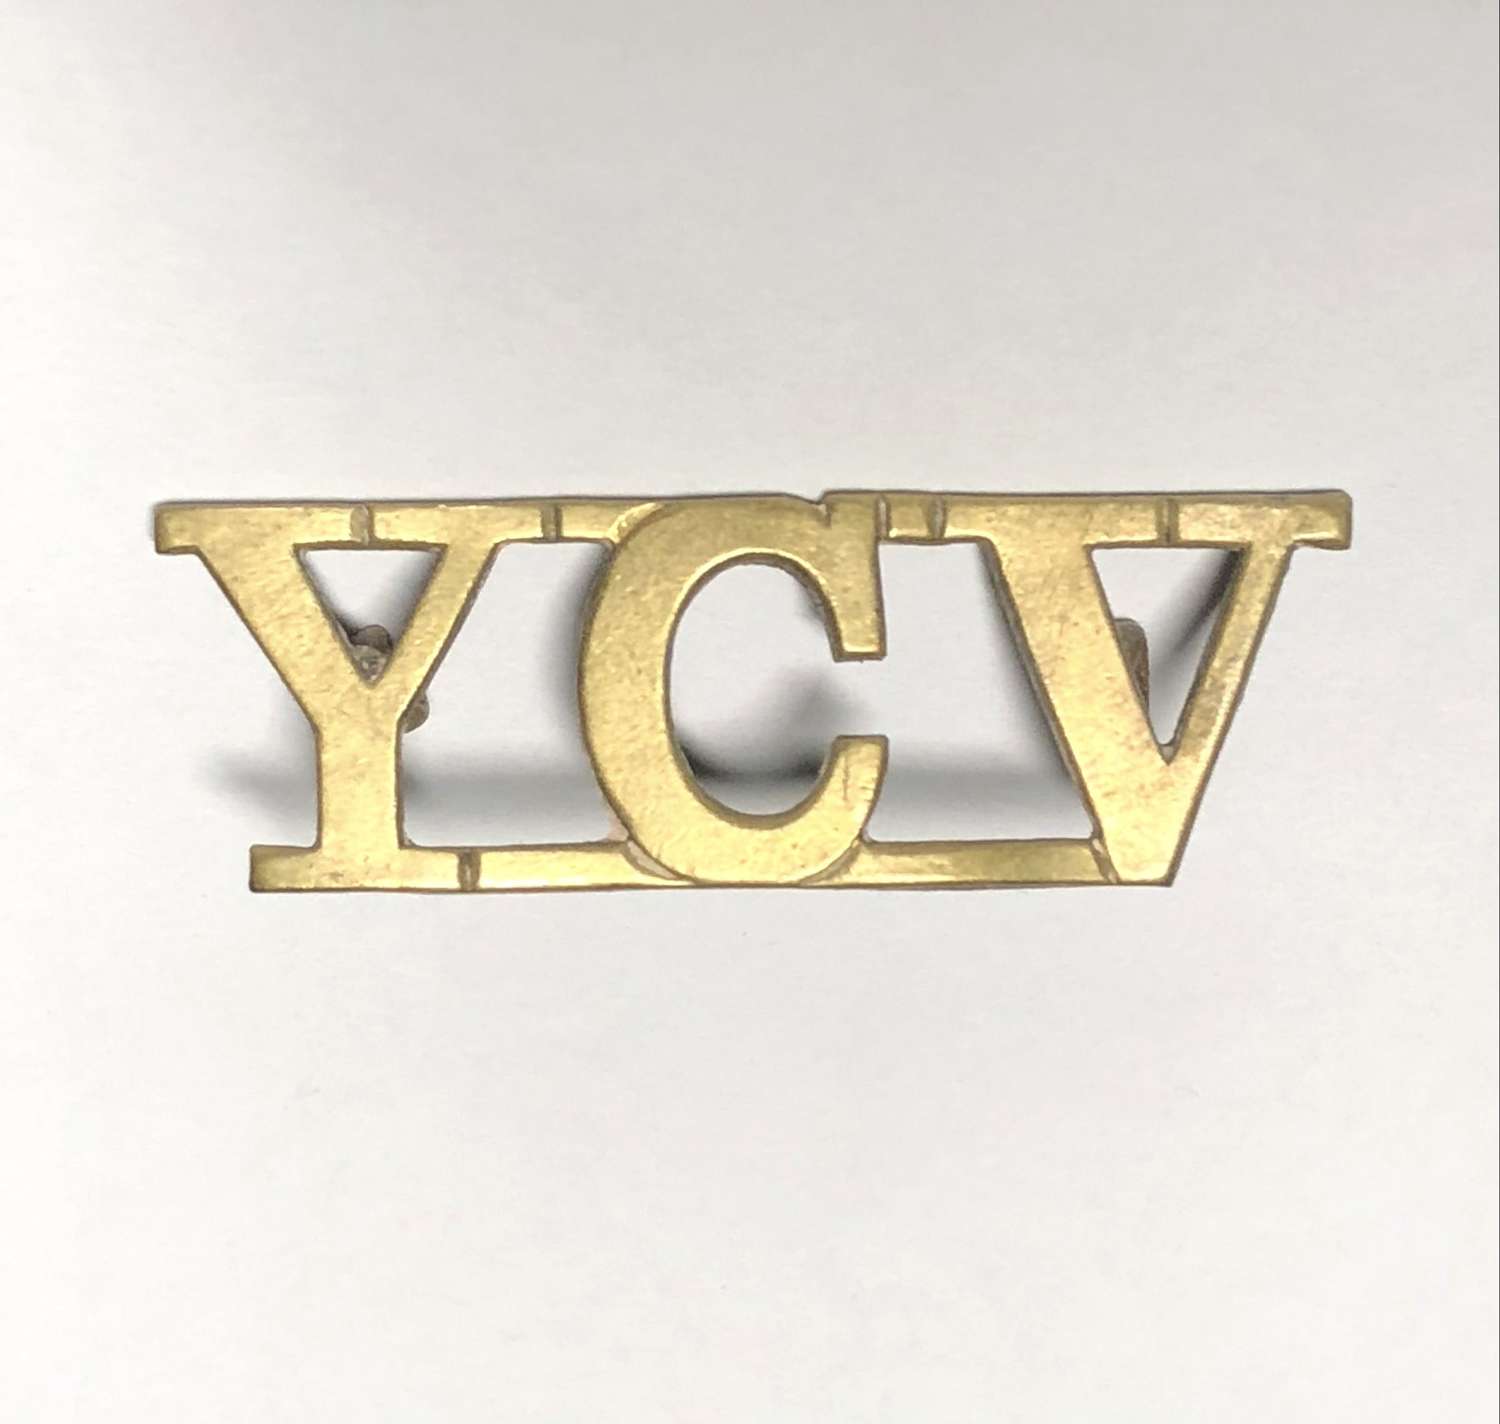 YCV 14th Bn ‘Young Citizens Volunteers’ Bn. Royal Irish Rifles title